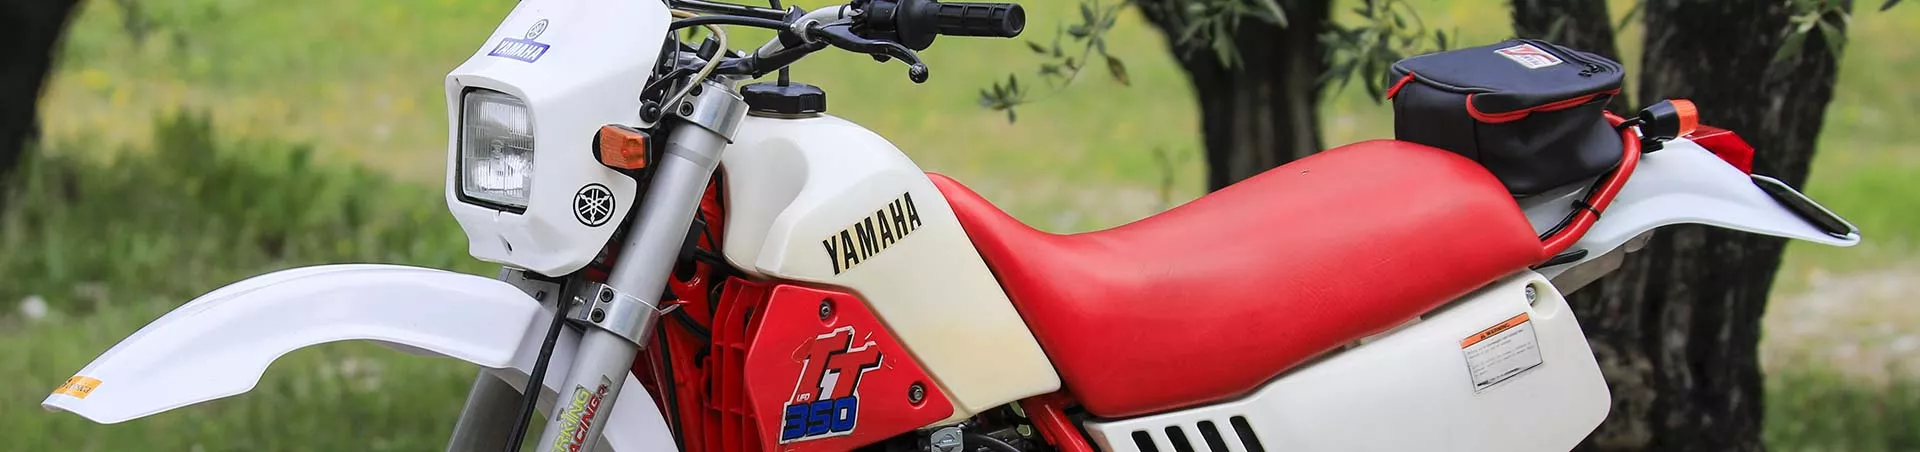 Yamaha-TT-350